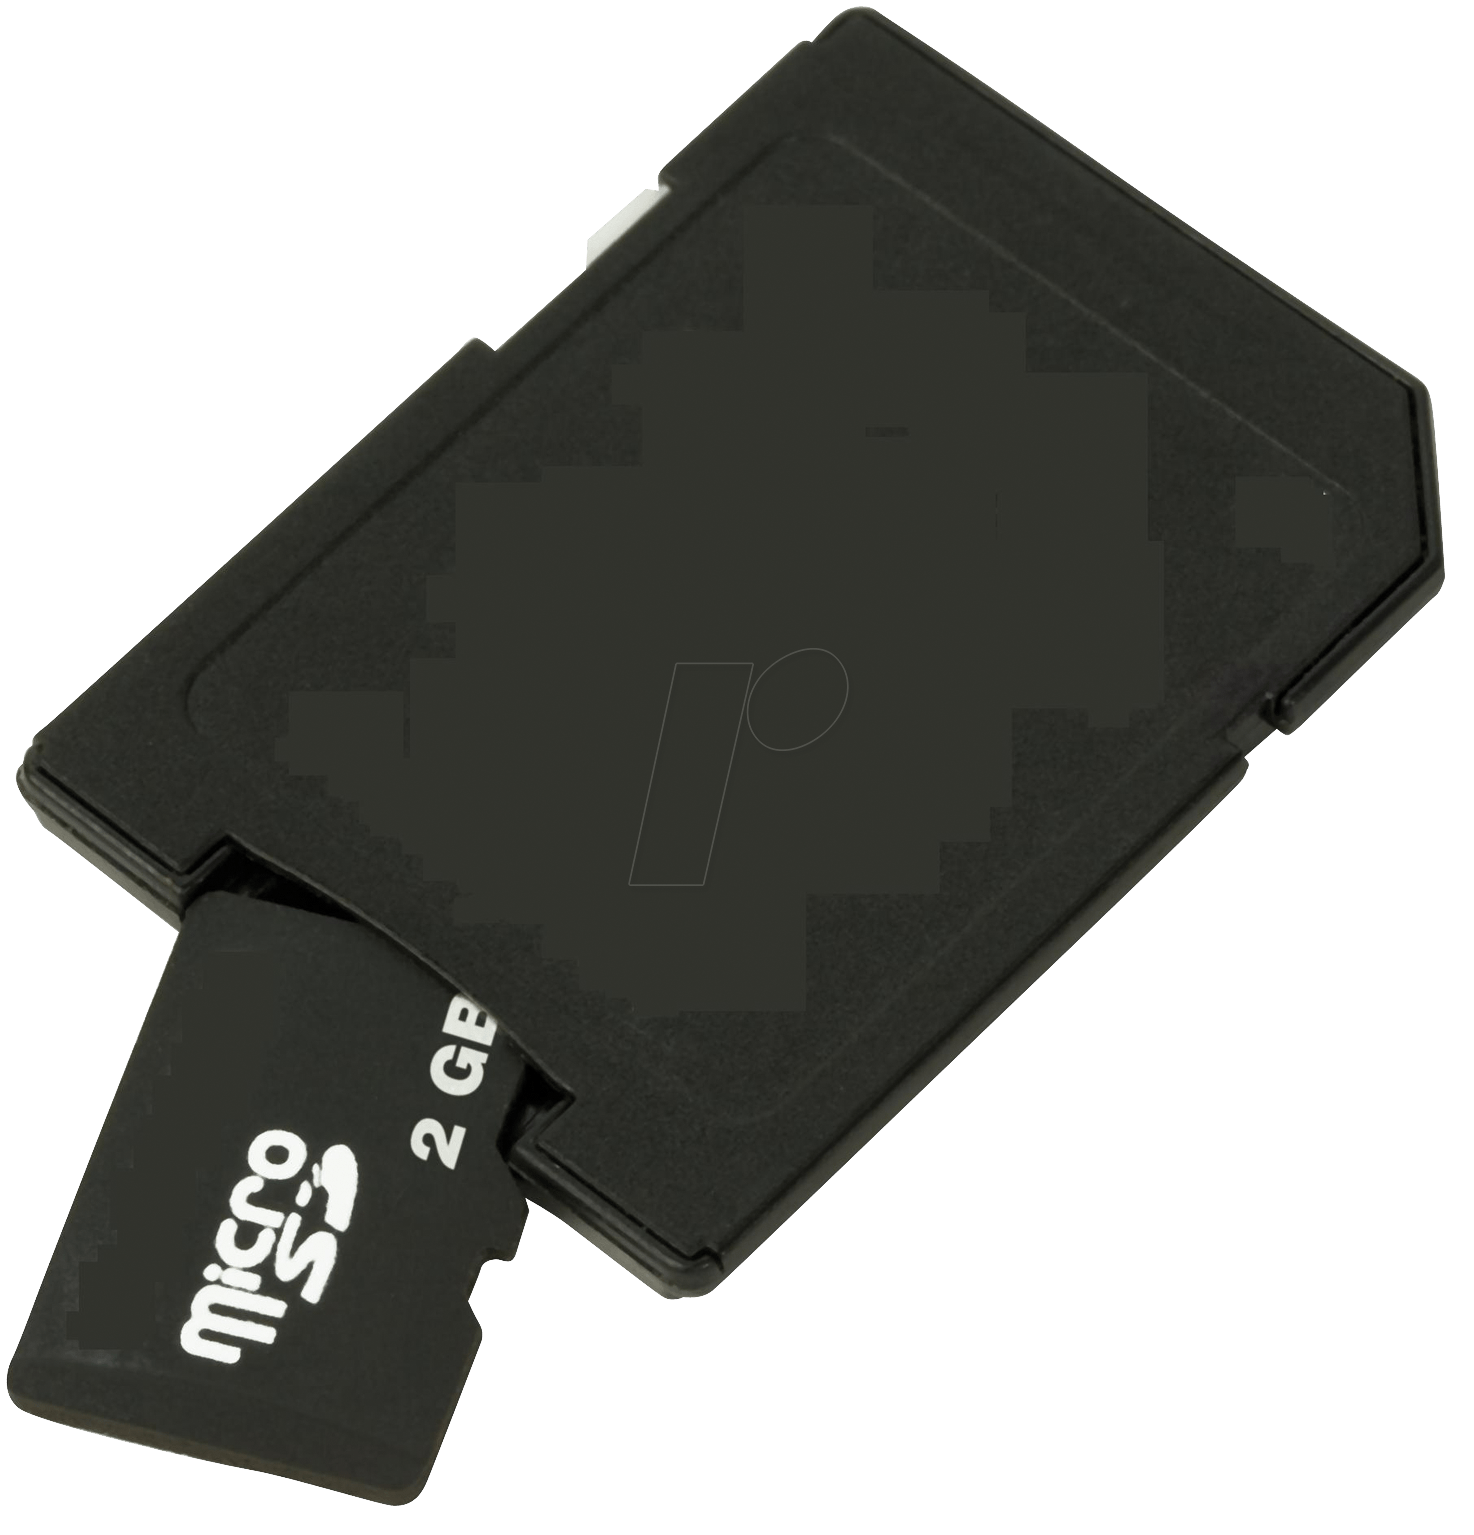 ADAPTER MSD - SD: Adaptateur Micro-SD vers carte SD chez reichelt elektronik